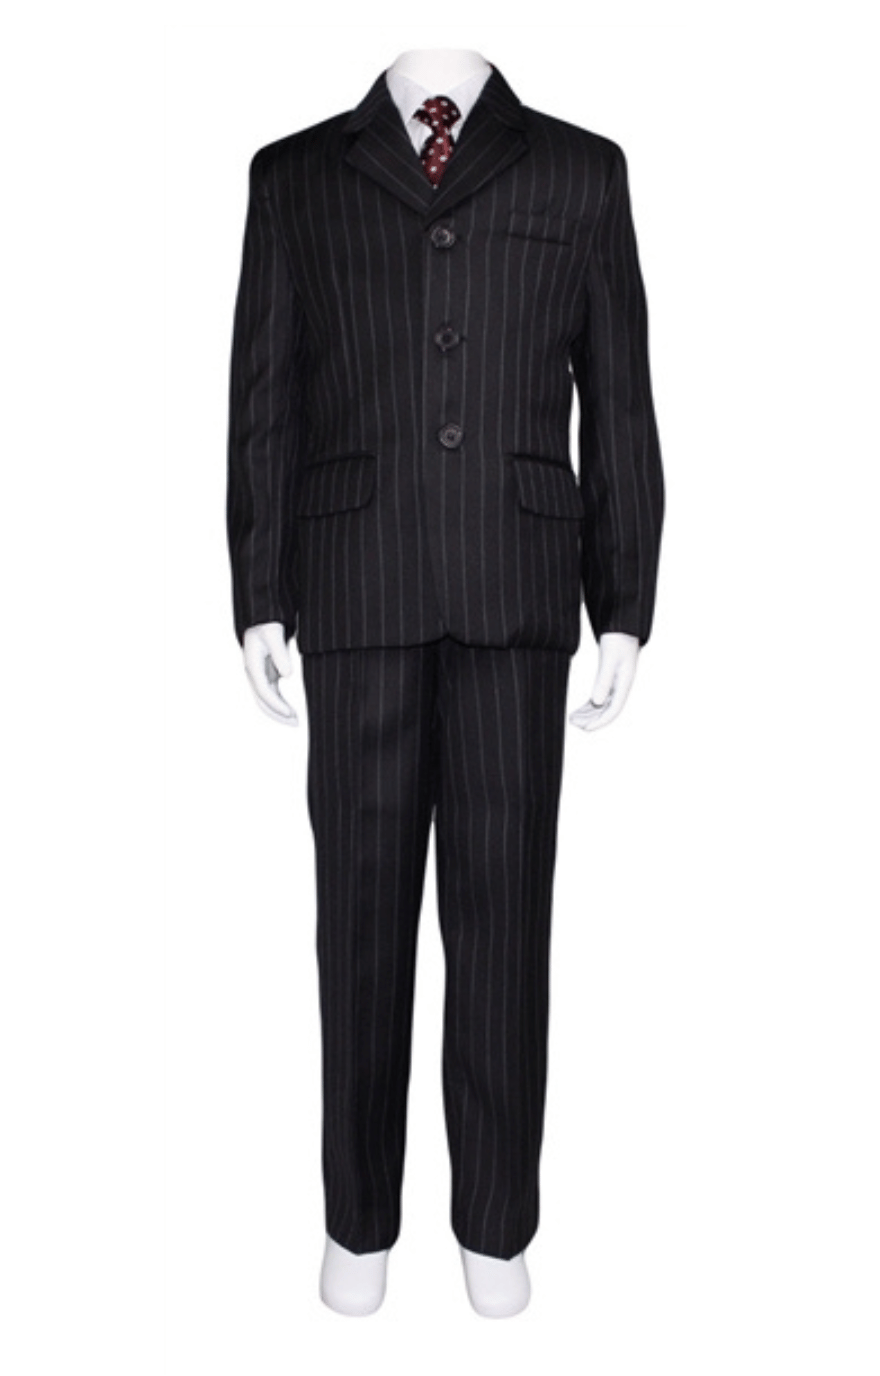 Edward 5pc Boys Suit: BLACK Stripe (Relaxed Fit)